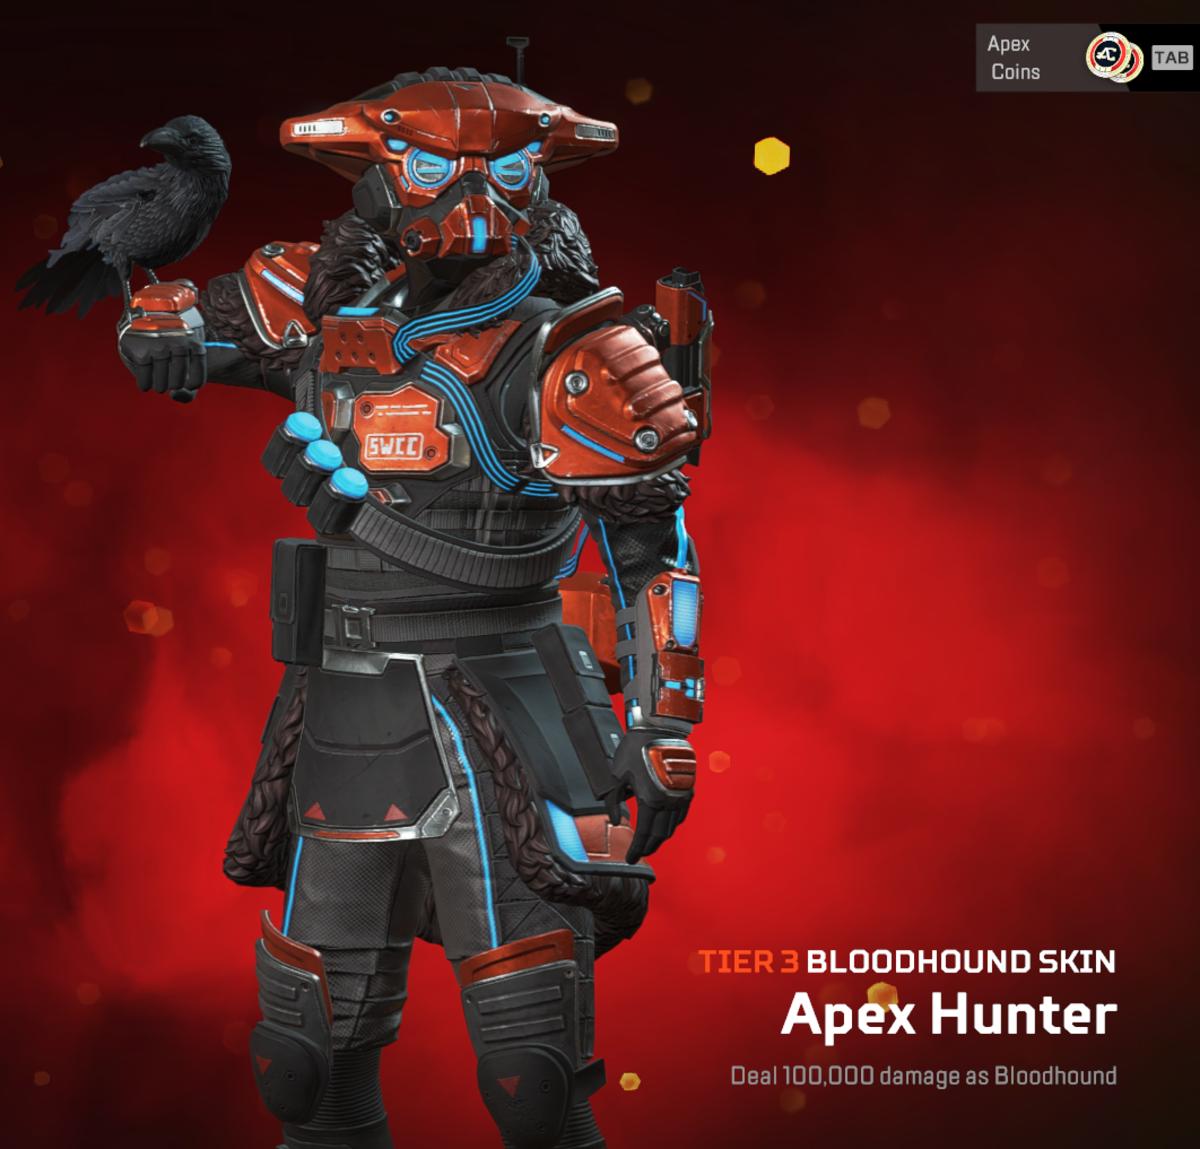 The Apex Hunter Prestige Skin for Bloodhound in Apex Legends.